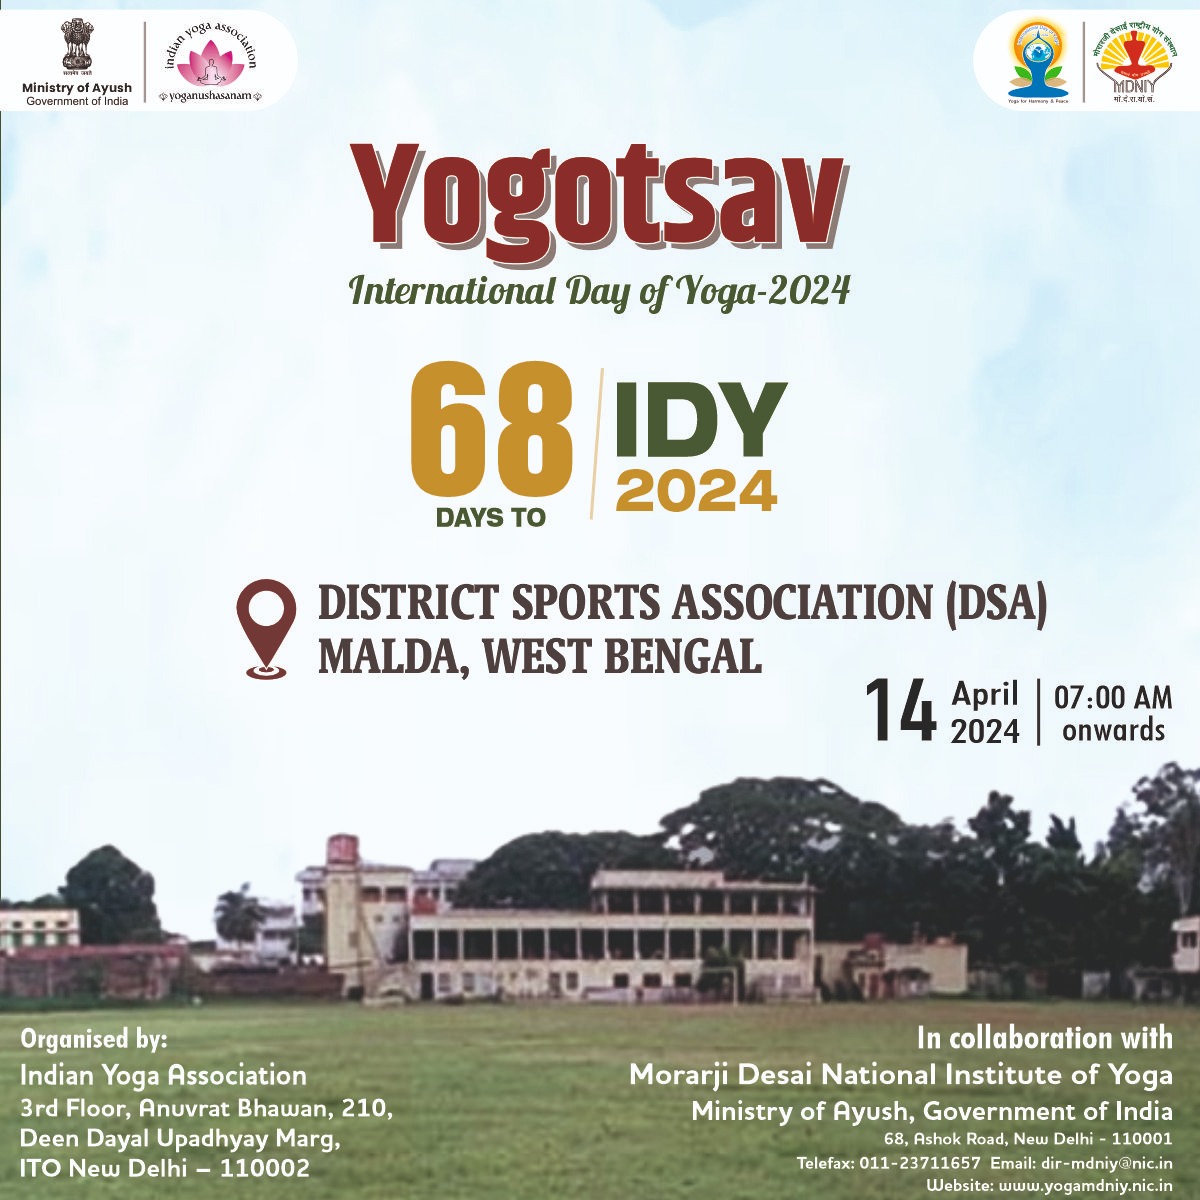 📍 District Sports Association, West Bengal 📆 April 14, 2024 6️⃣8️⃣ Days to International Day of Yoga 2024 Indian Yoga Association in collaboration with MDNIY is organizing Yogotsav programme tomorrow. #Yogotsav2024 #IDY2024 #Yoga